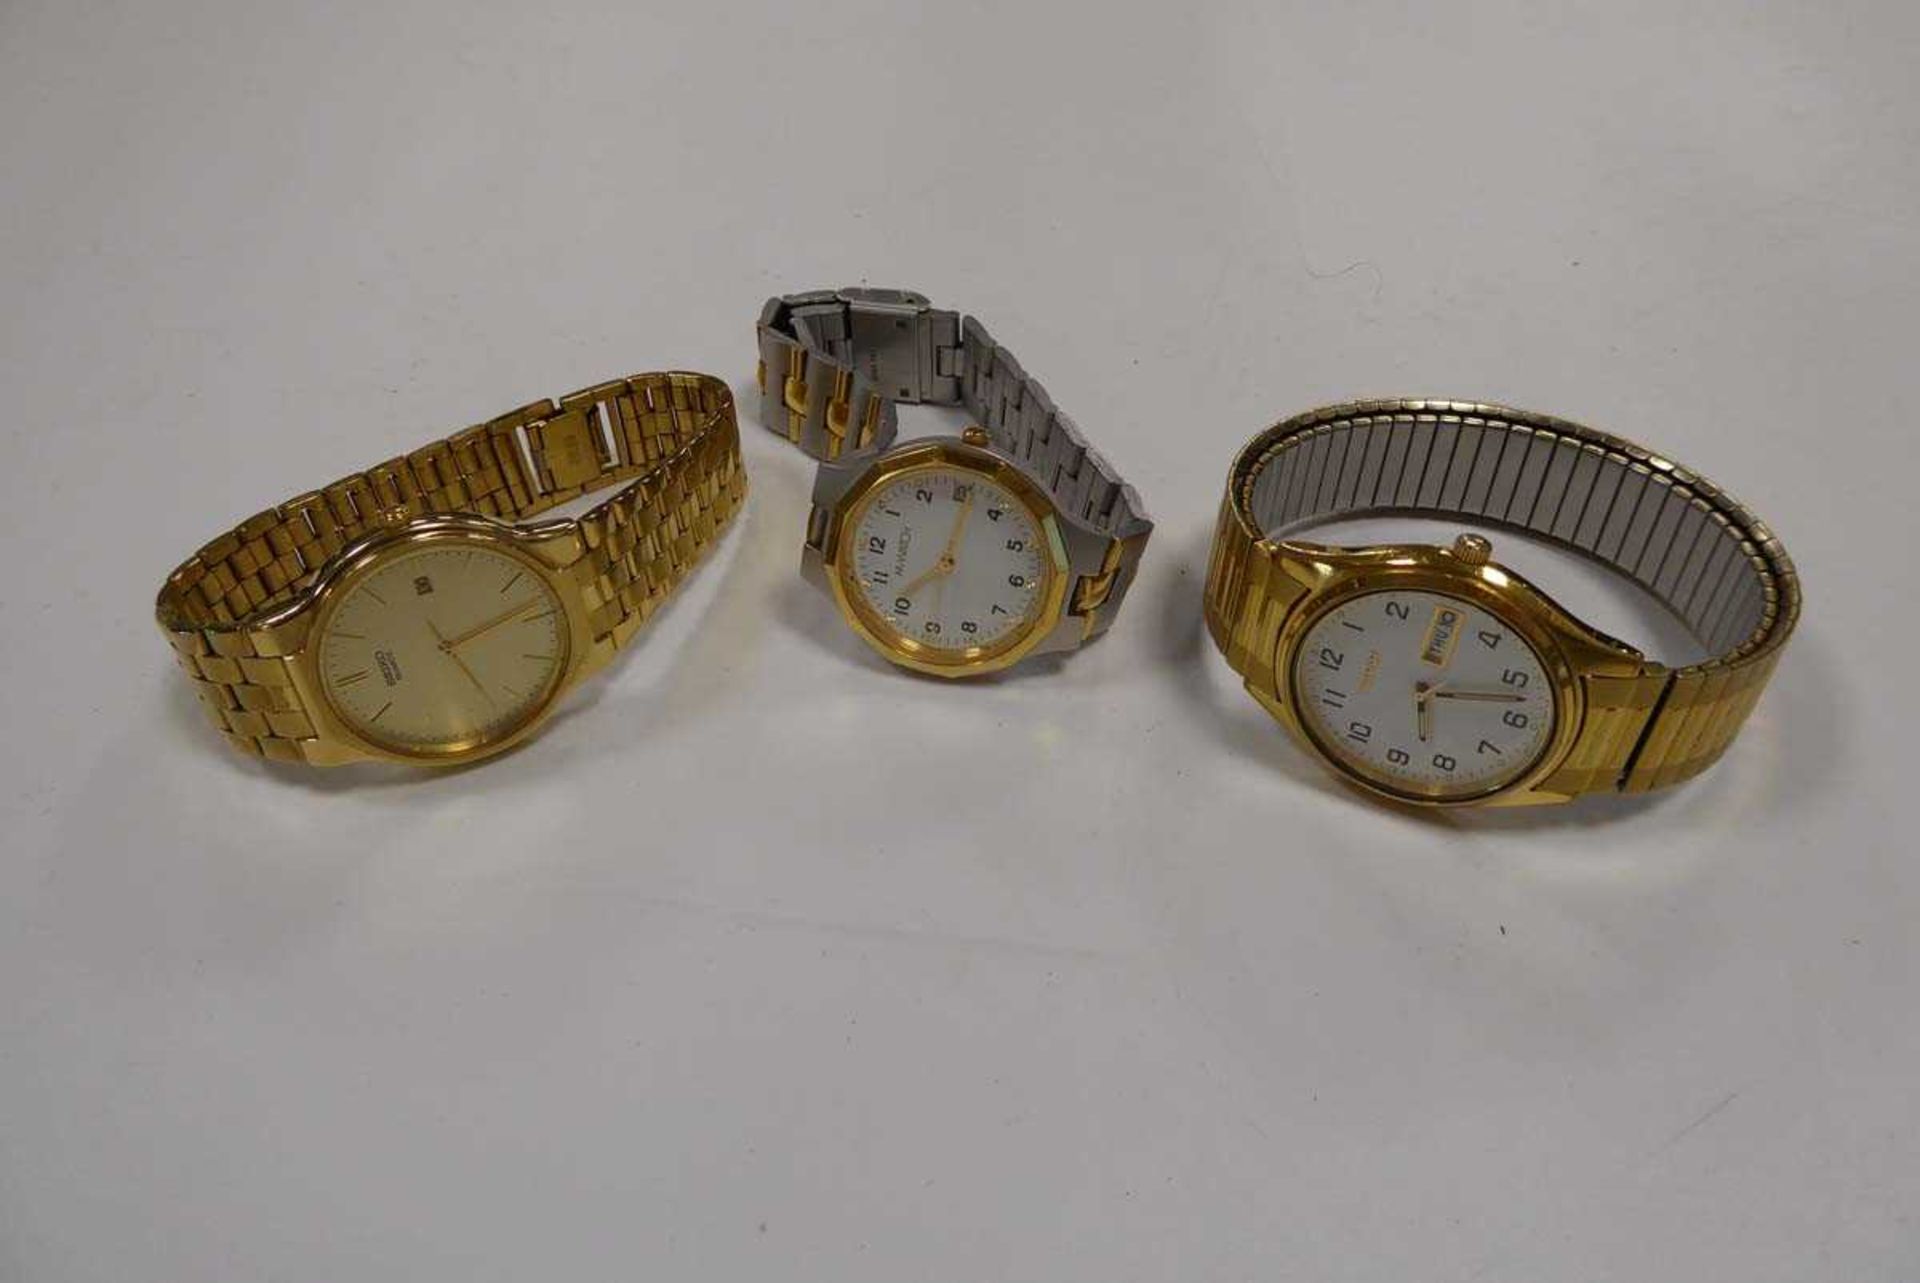 3 quartz watches, 2 Seiko and one M watch